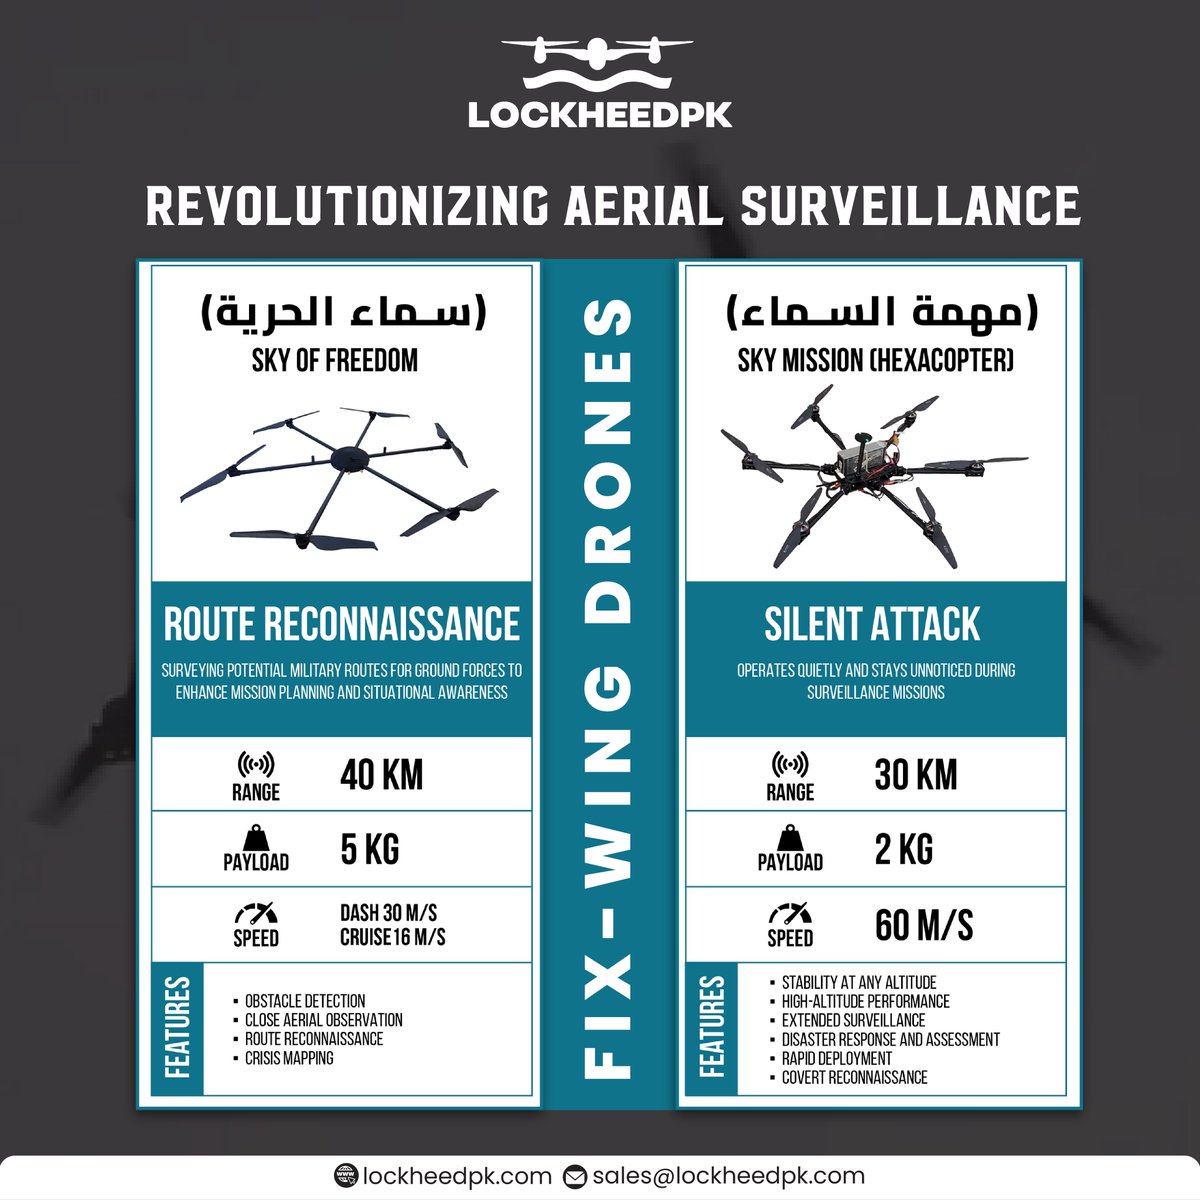 Take flight with LockheedPK's innovative fixed-wing drones!

#LockheedPK #FixedWingDrones #AerialInnovation #FlightTechnology #ExploreWithLockheed #AdvancedDrones #UnmatchedPerformance #FutureOfFlight